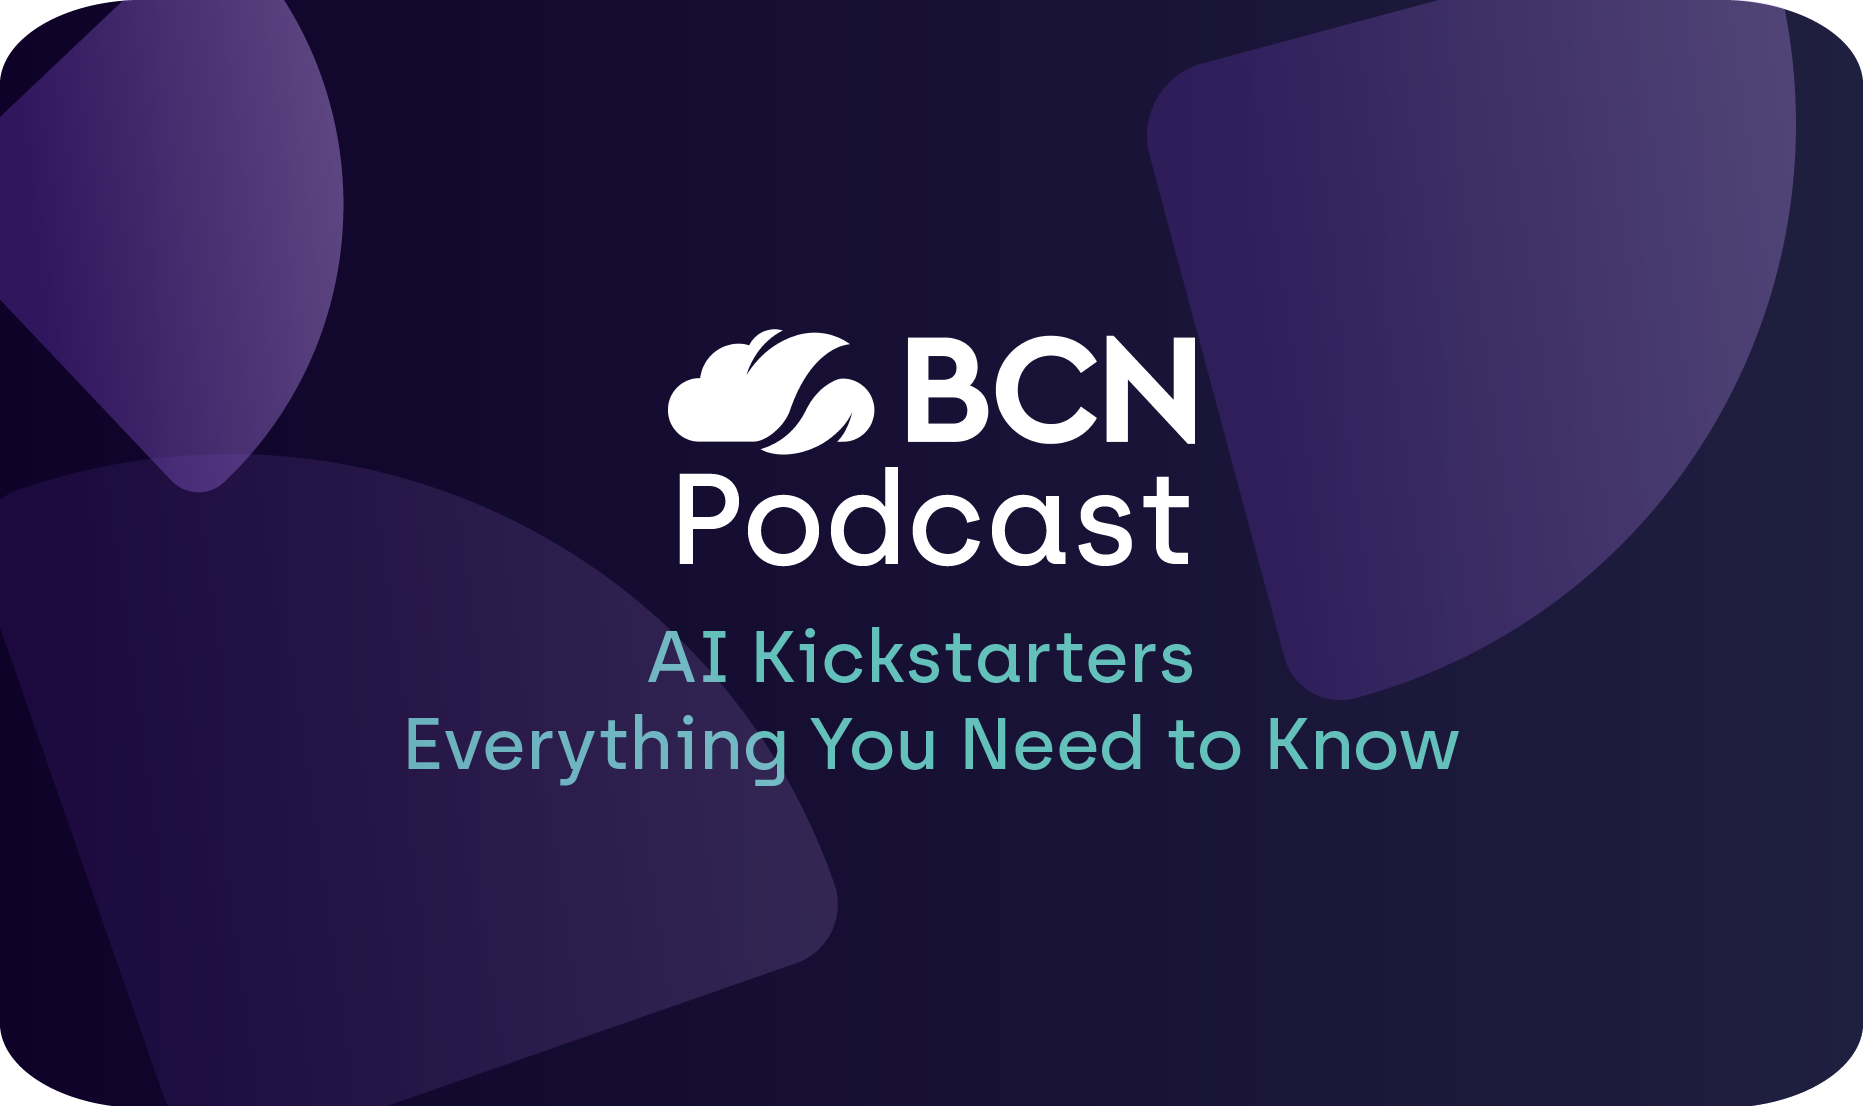 BCN Podcast: AI Kickstarters